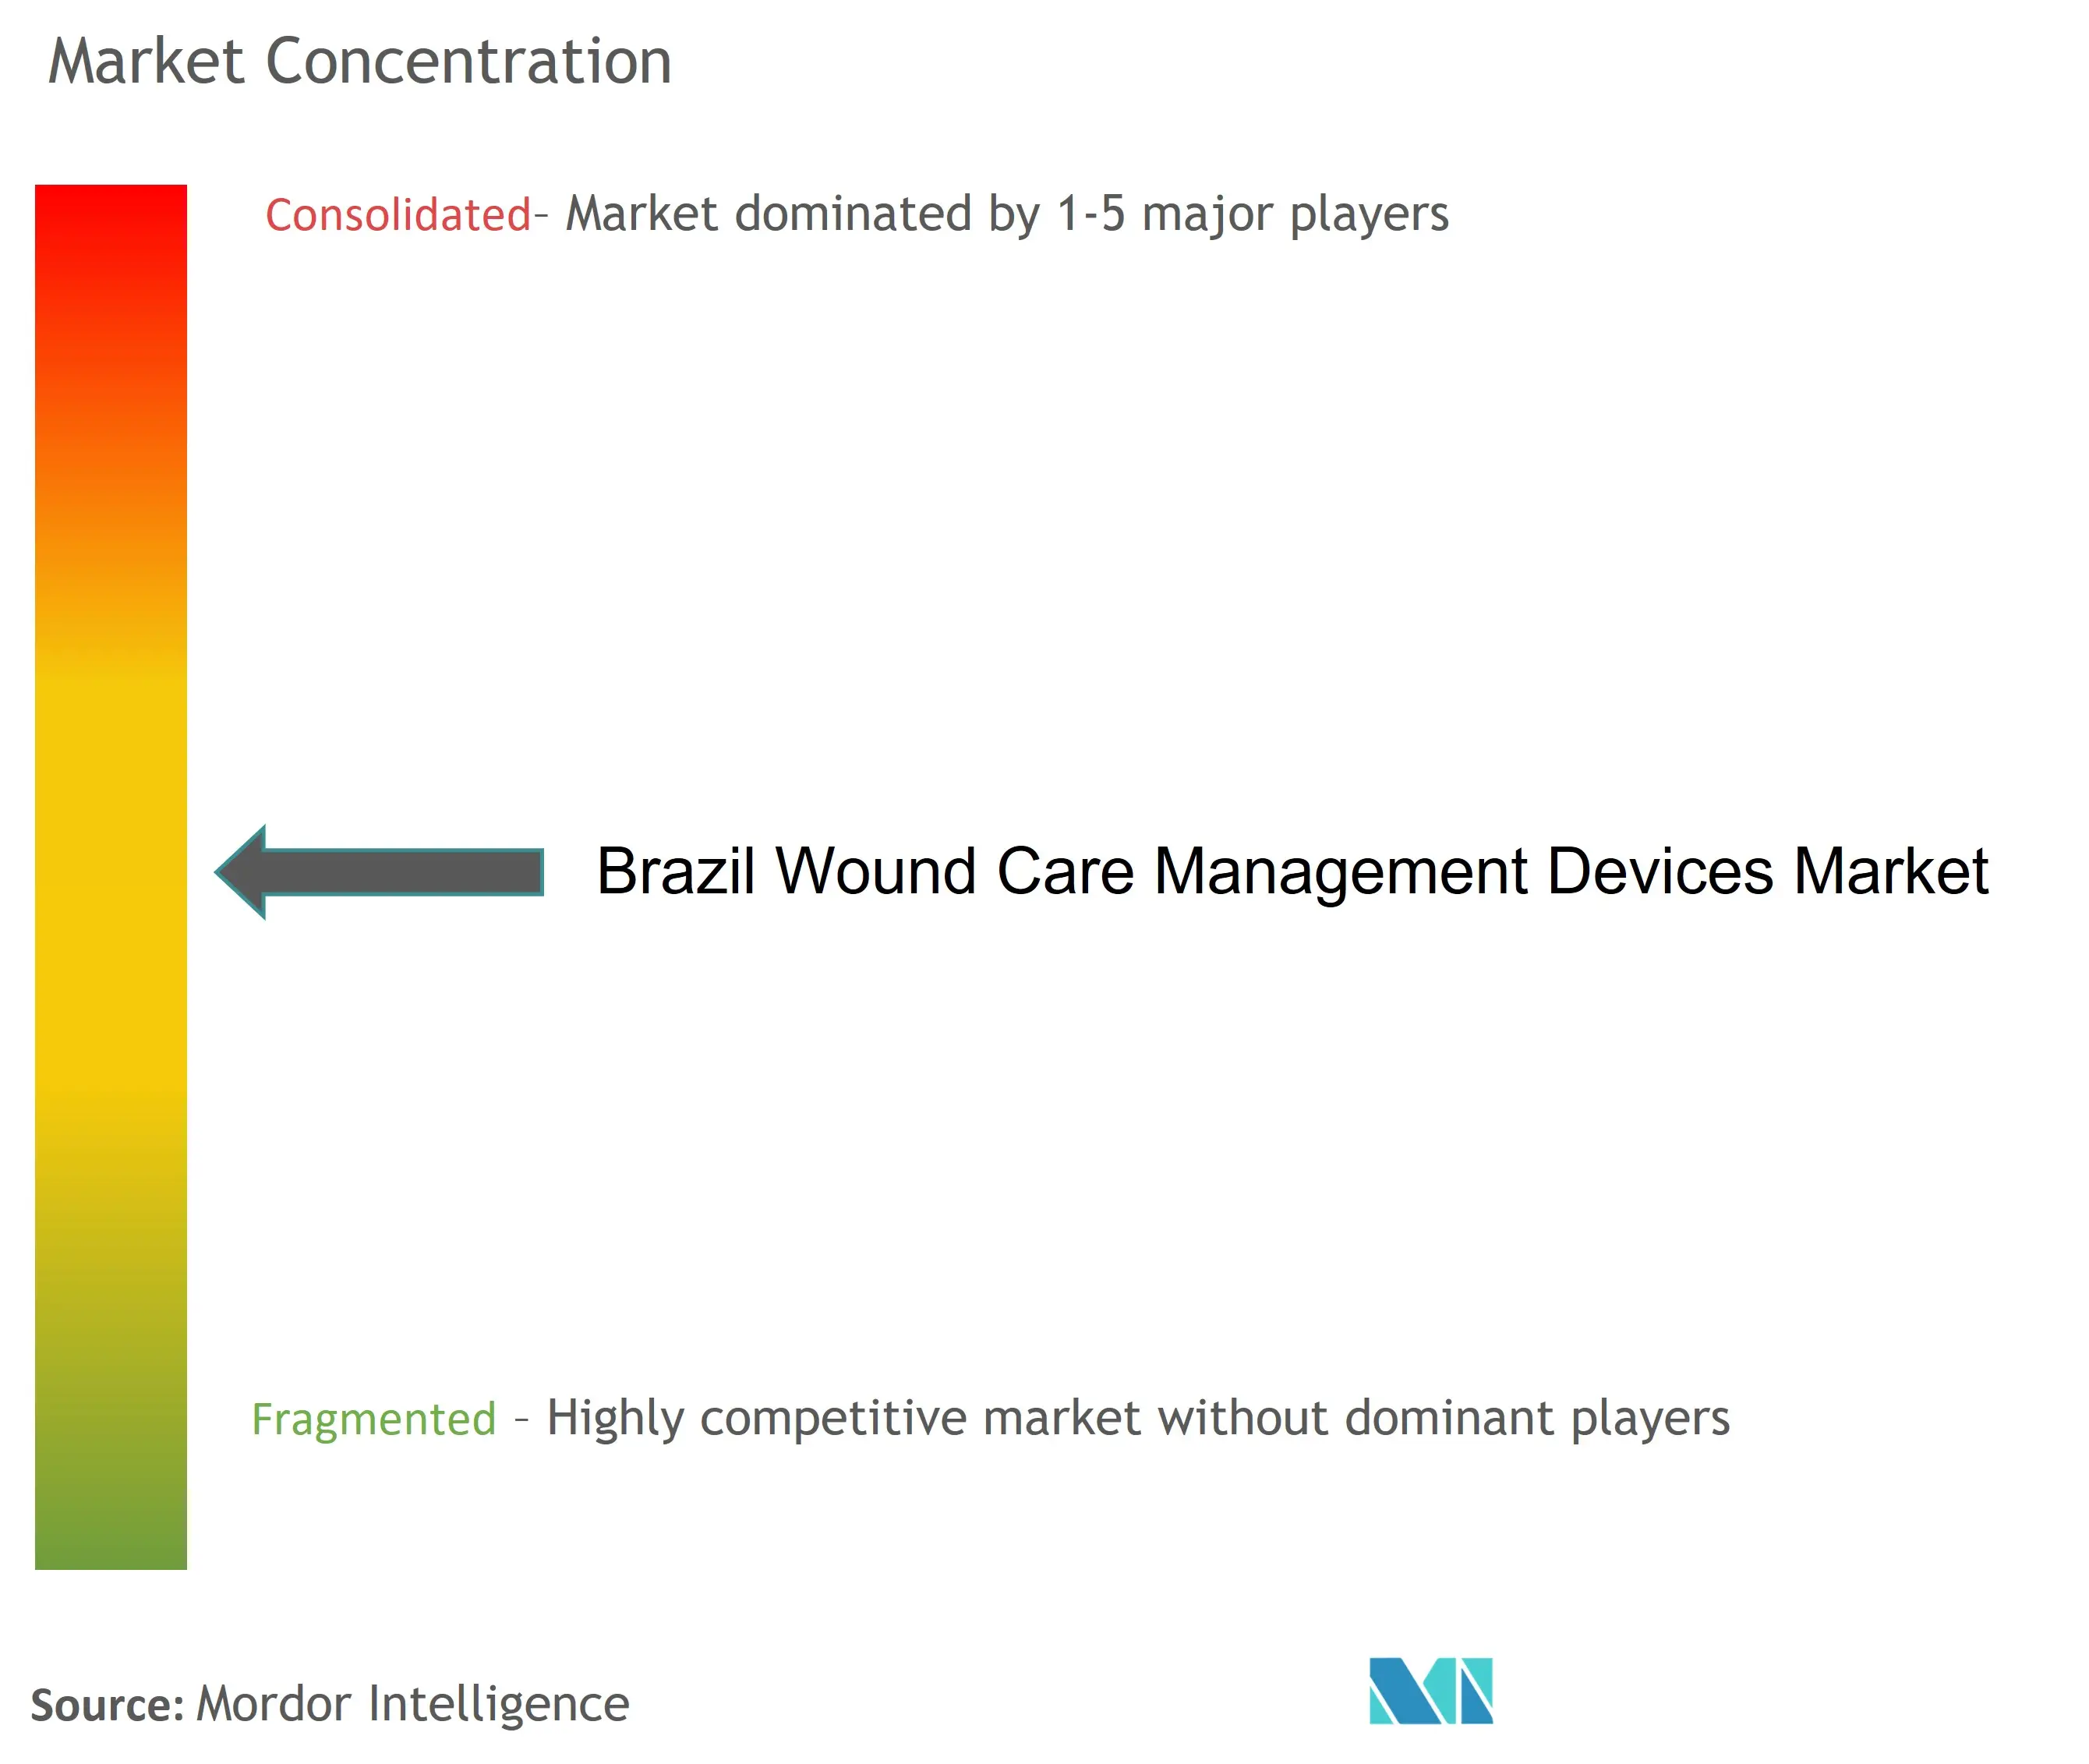 Brazil Wound Care Management Devices Market Concentration